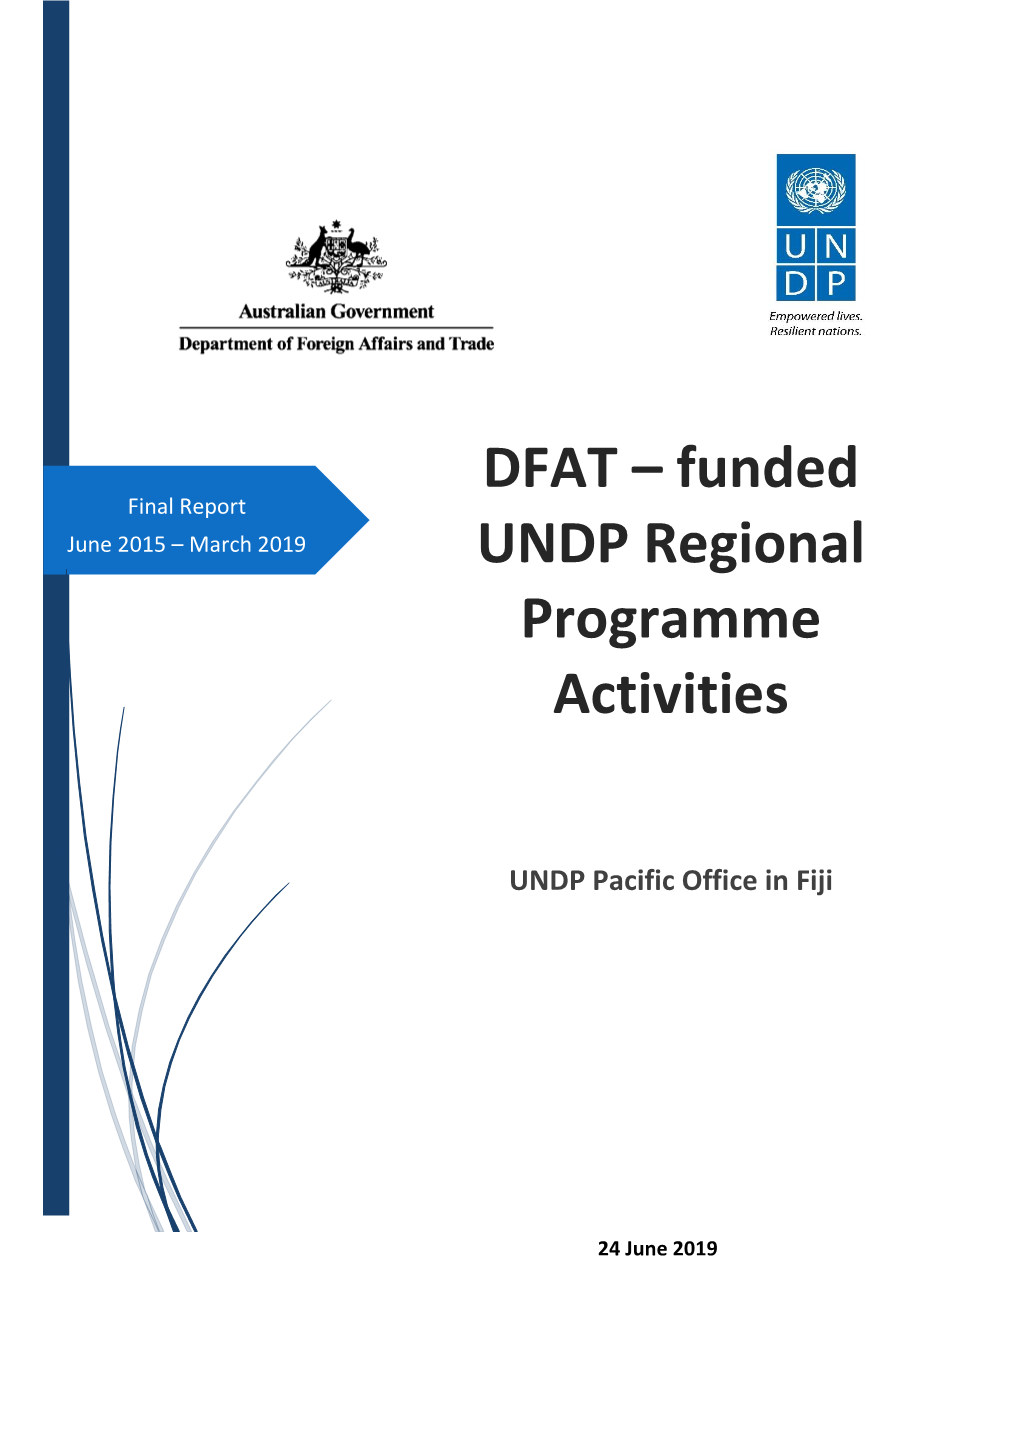 DFAT – Funded UNDP Regional Programme Activities